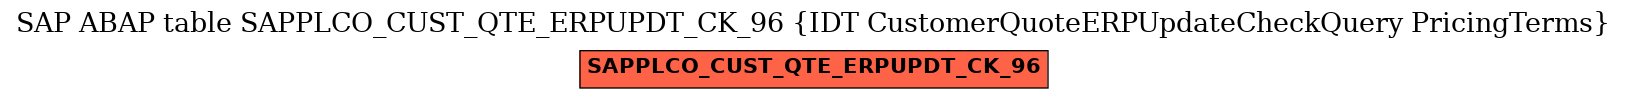 E-R Diagram for table SAPPLCO_CUST_QTE_ERPUPDT_CK_96 (IDT CustomerQuoteERPUpdateCheckQuery PricingTerms)